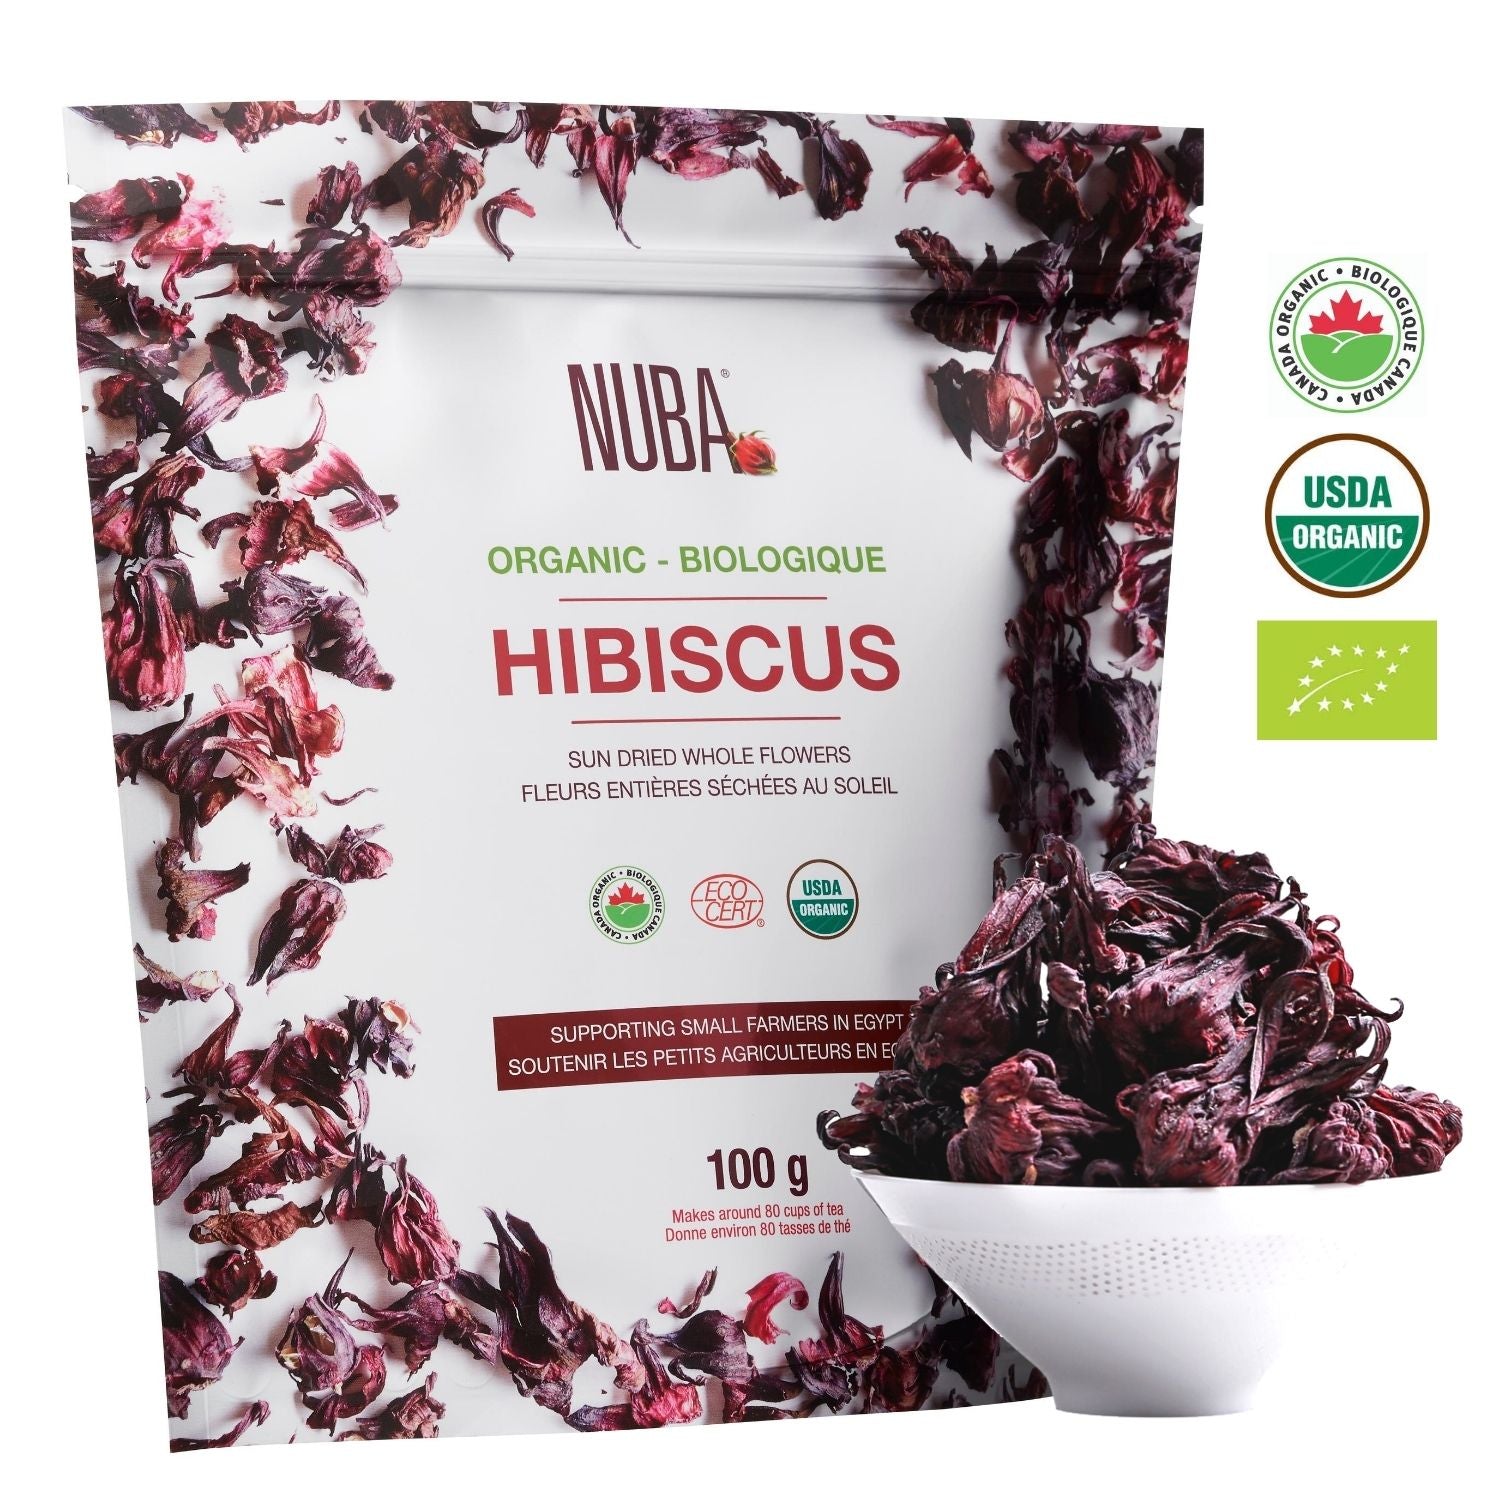 Loose Tea, Organic Whole Hibiscus Flowers (100g)